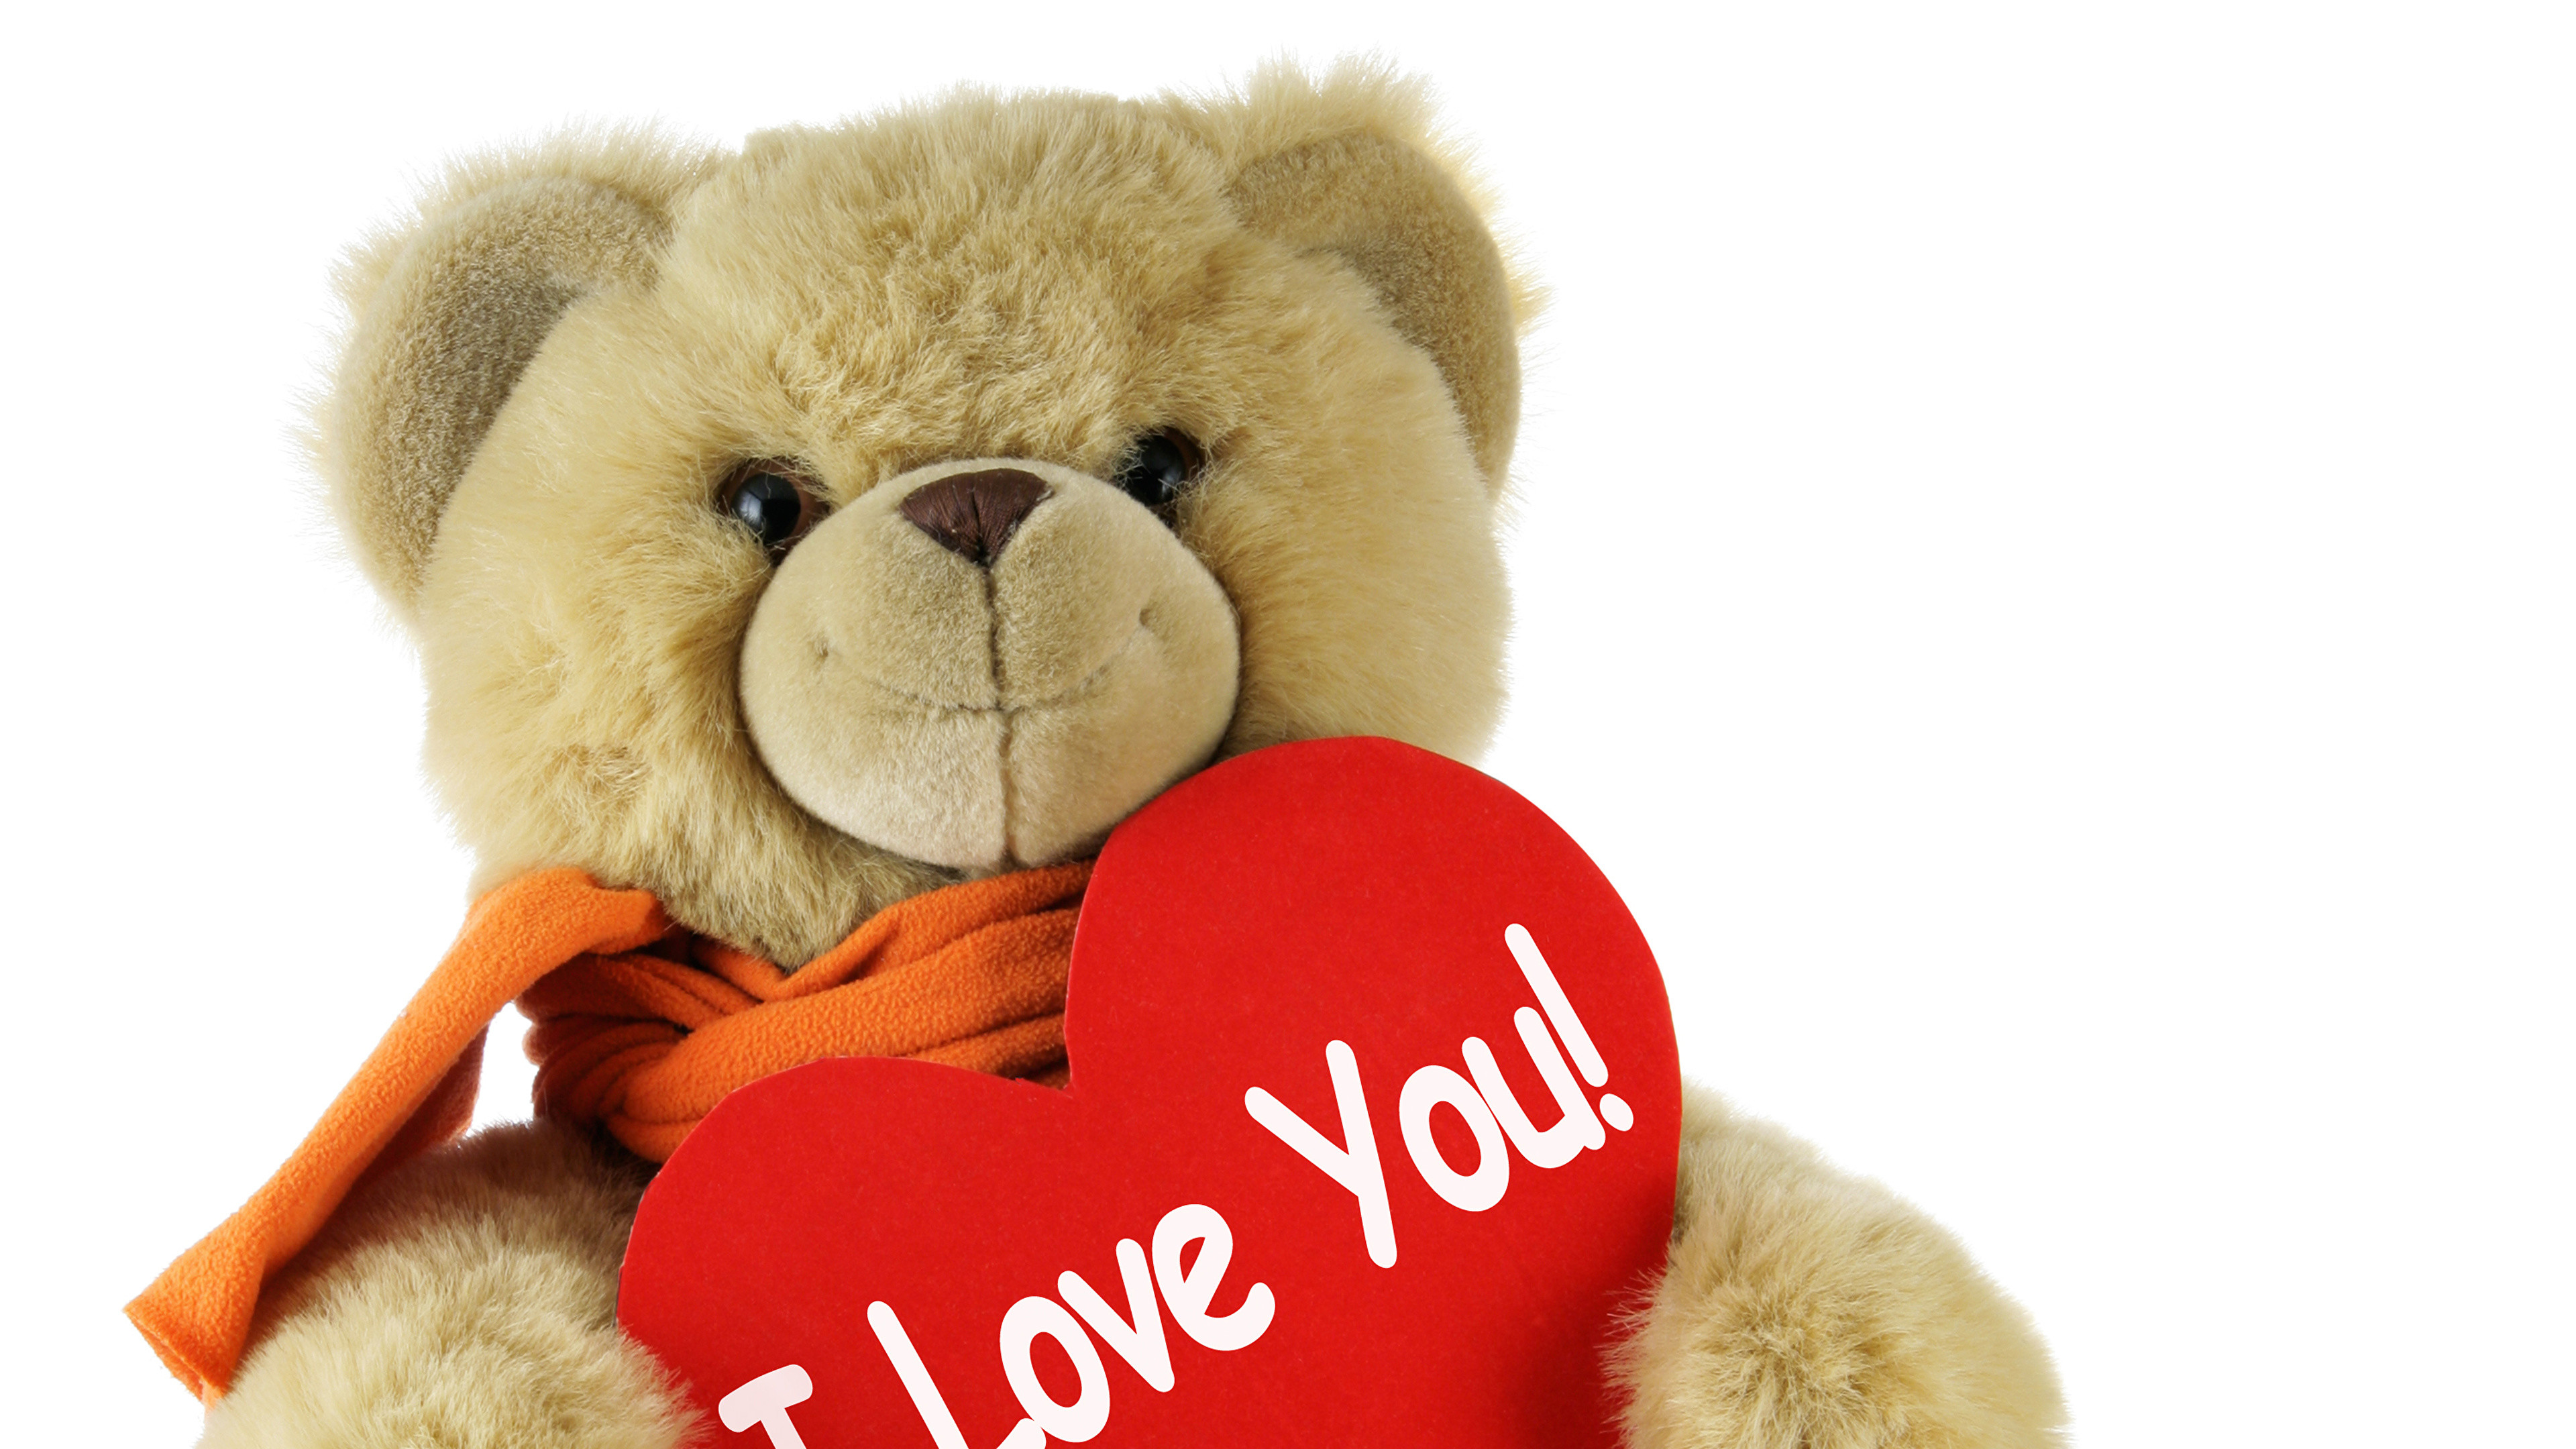 3840x2160 Wallpaper Valentine's Day English Heart Love Teddy bear White background  